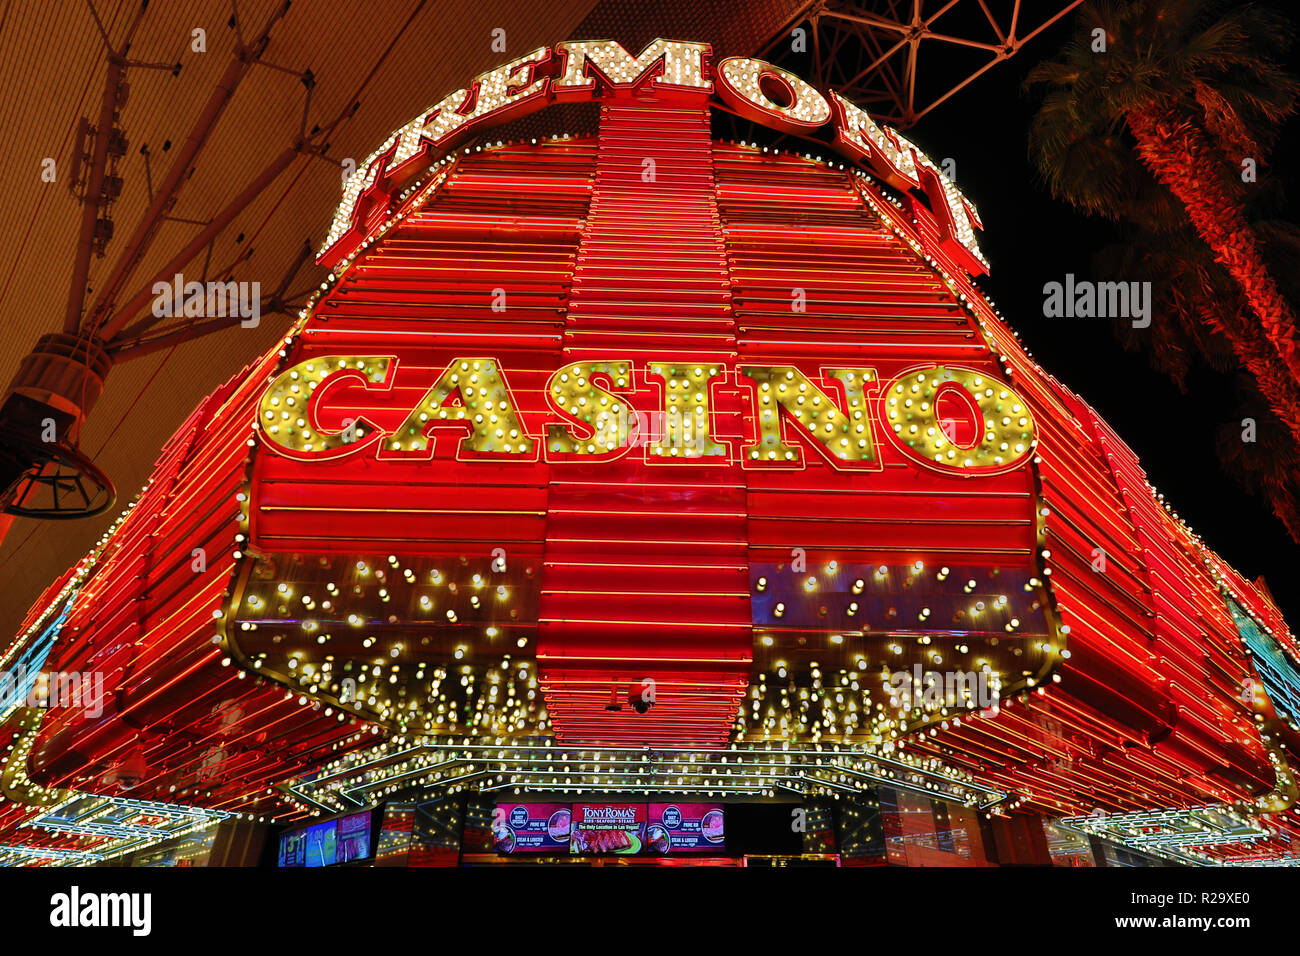 Neon lights of casinos in Fremont Street at night, Las Vegas, Nevada, America Stock Photo